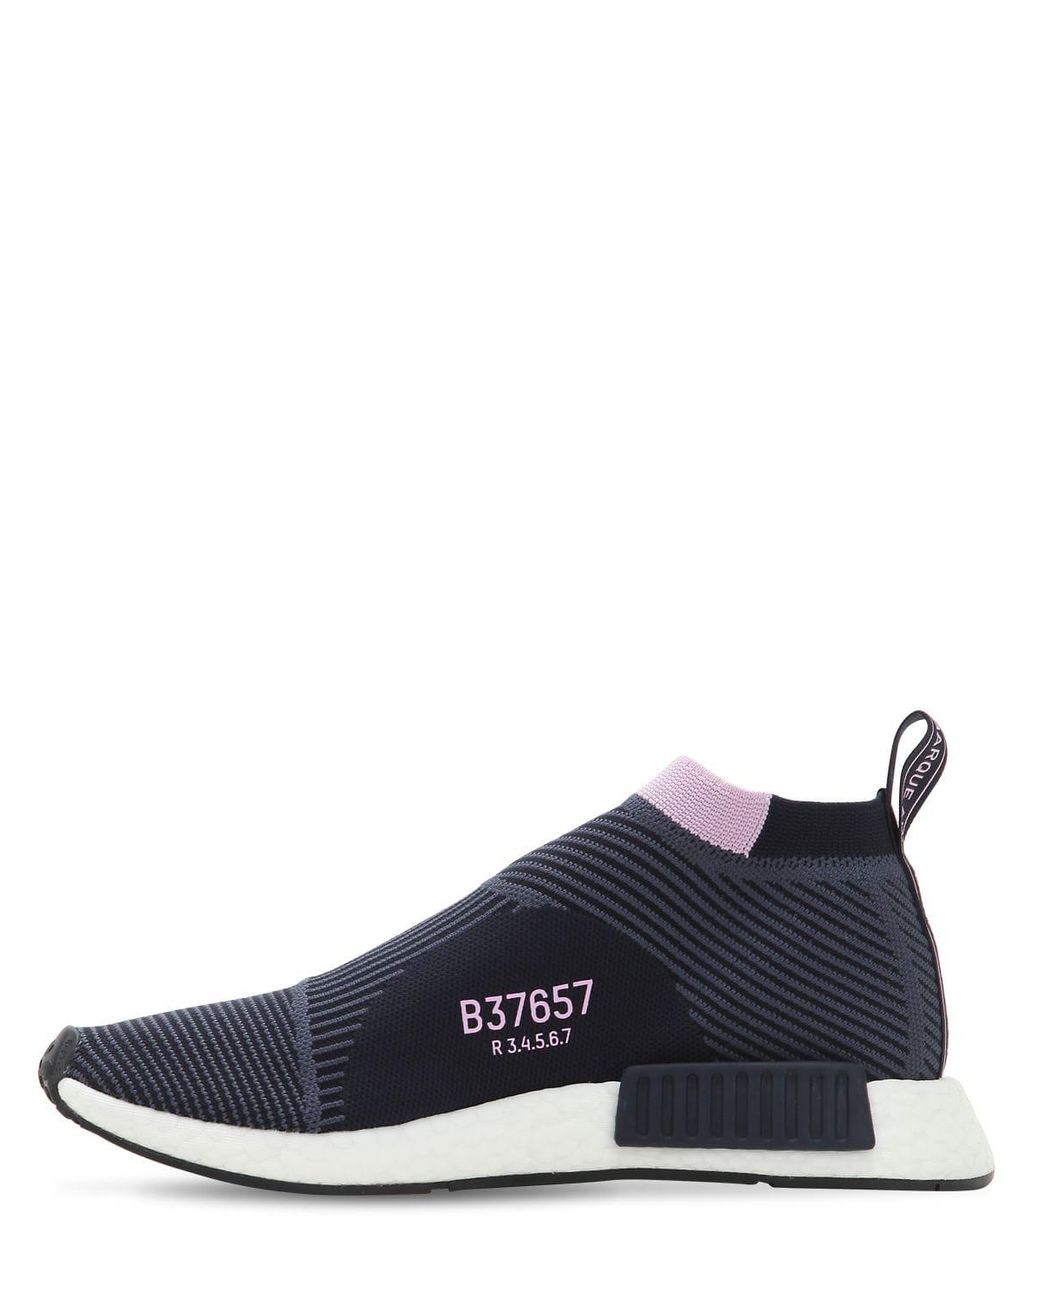 adidas Originals Nmd Cs1 Primeknit Sneakers in Gray | Lyst